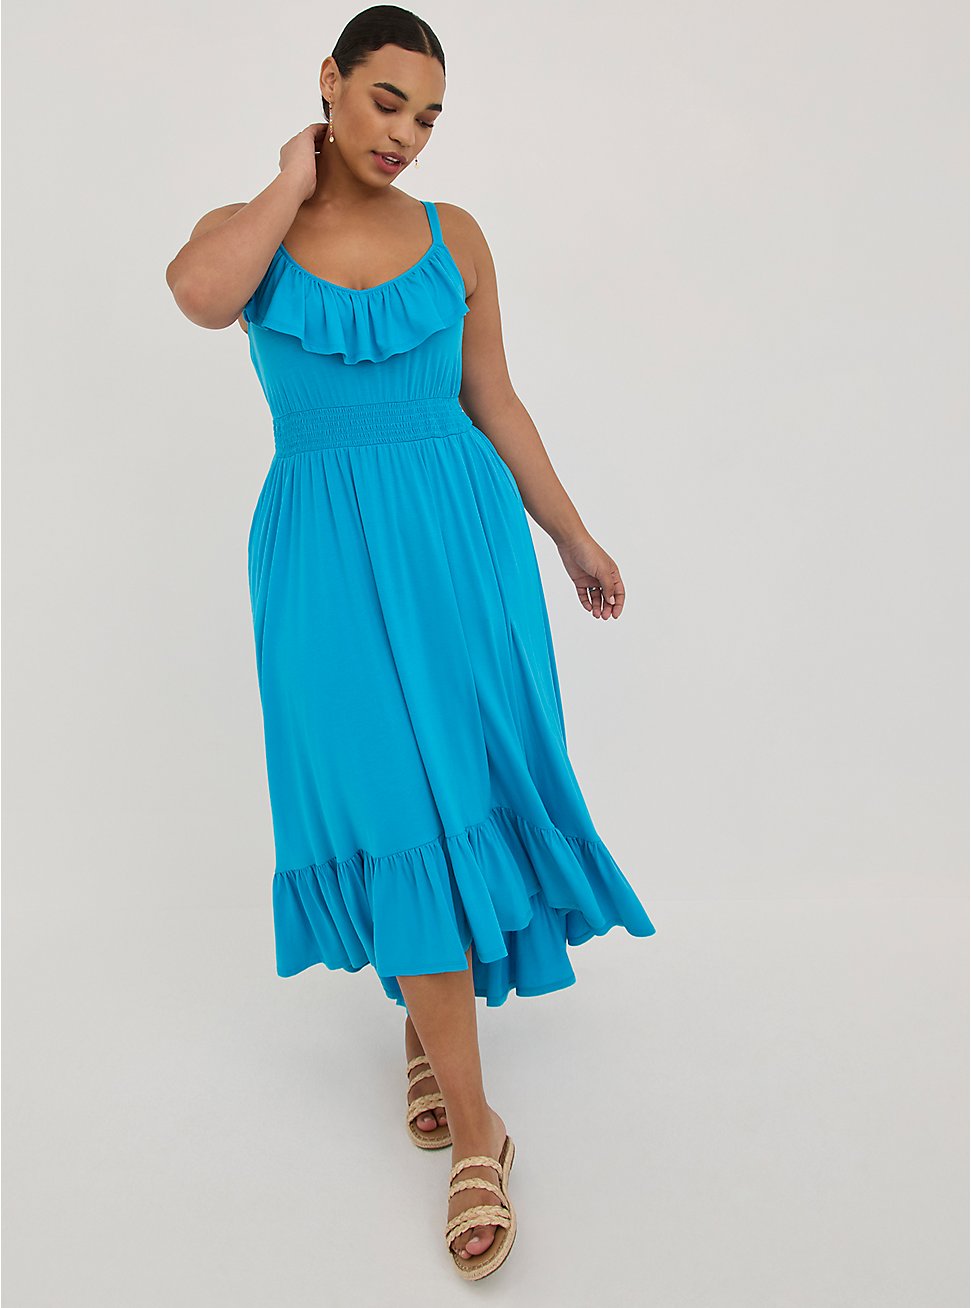 Plus Size Ruffle Smocked Waist Hi-Low Maxi Dress - Jersey Blue, BLUE, hi-res